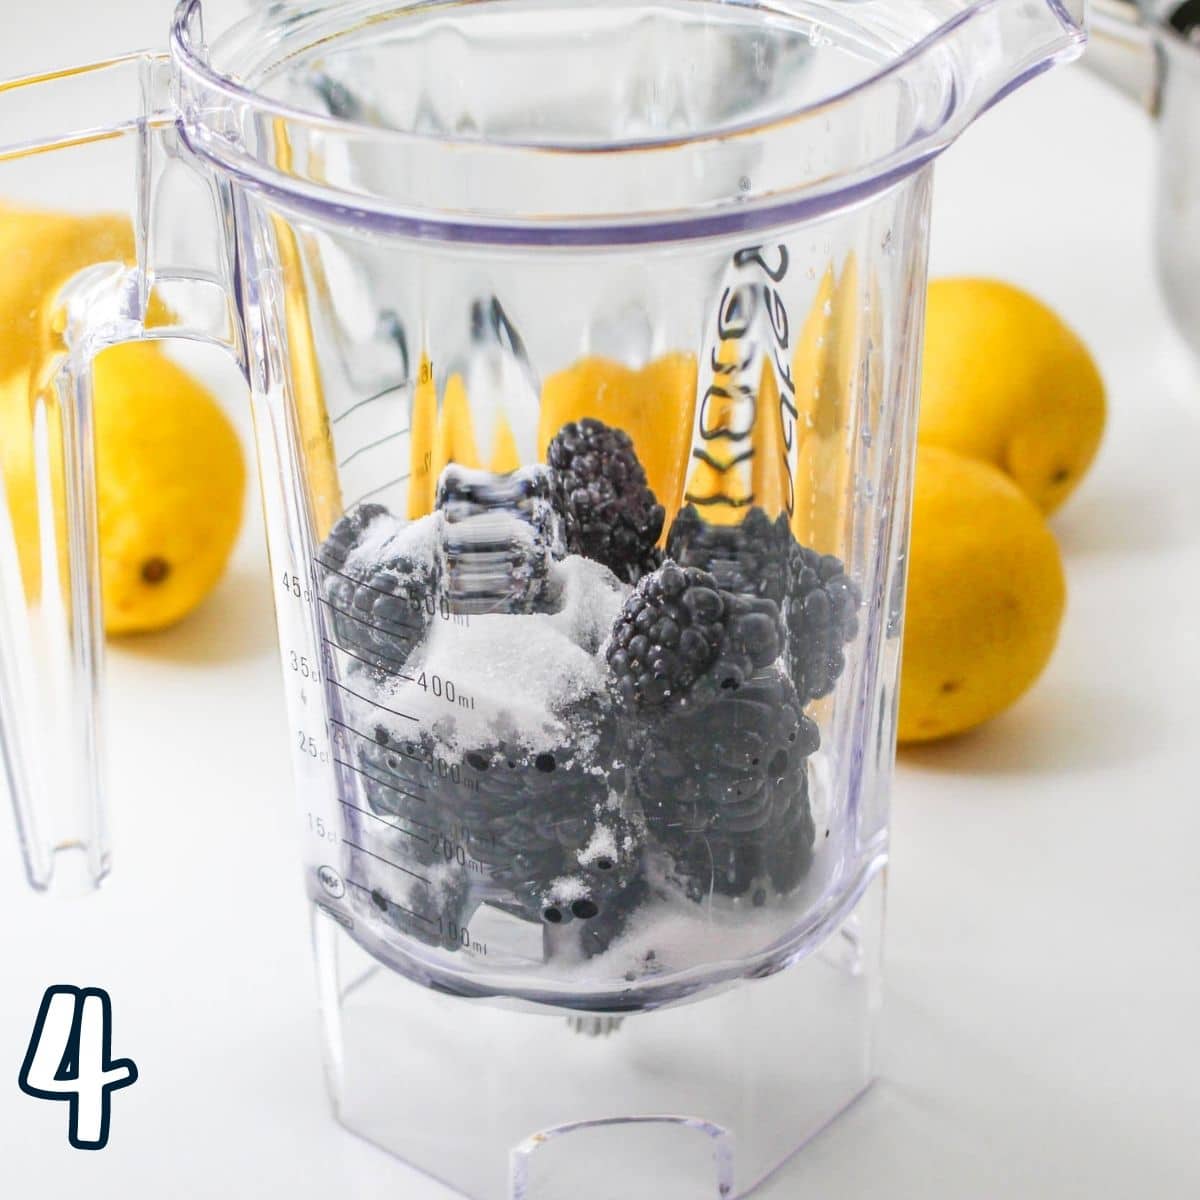 Blackberries and sugar in a blender pitcher. 